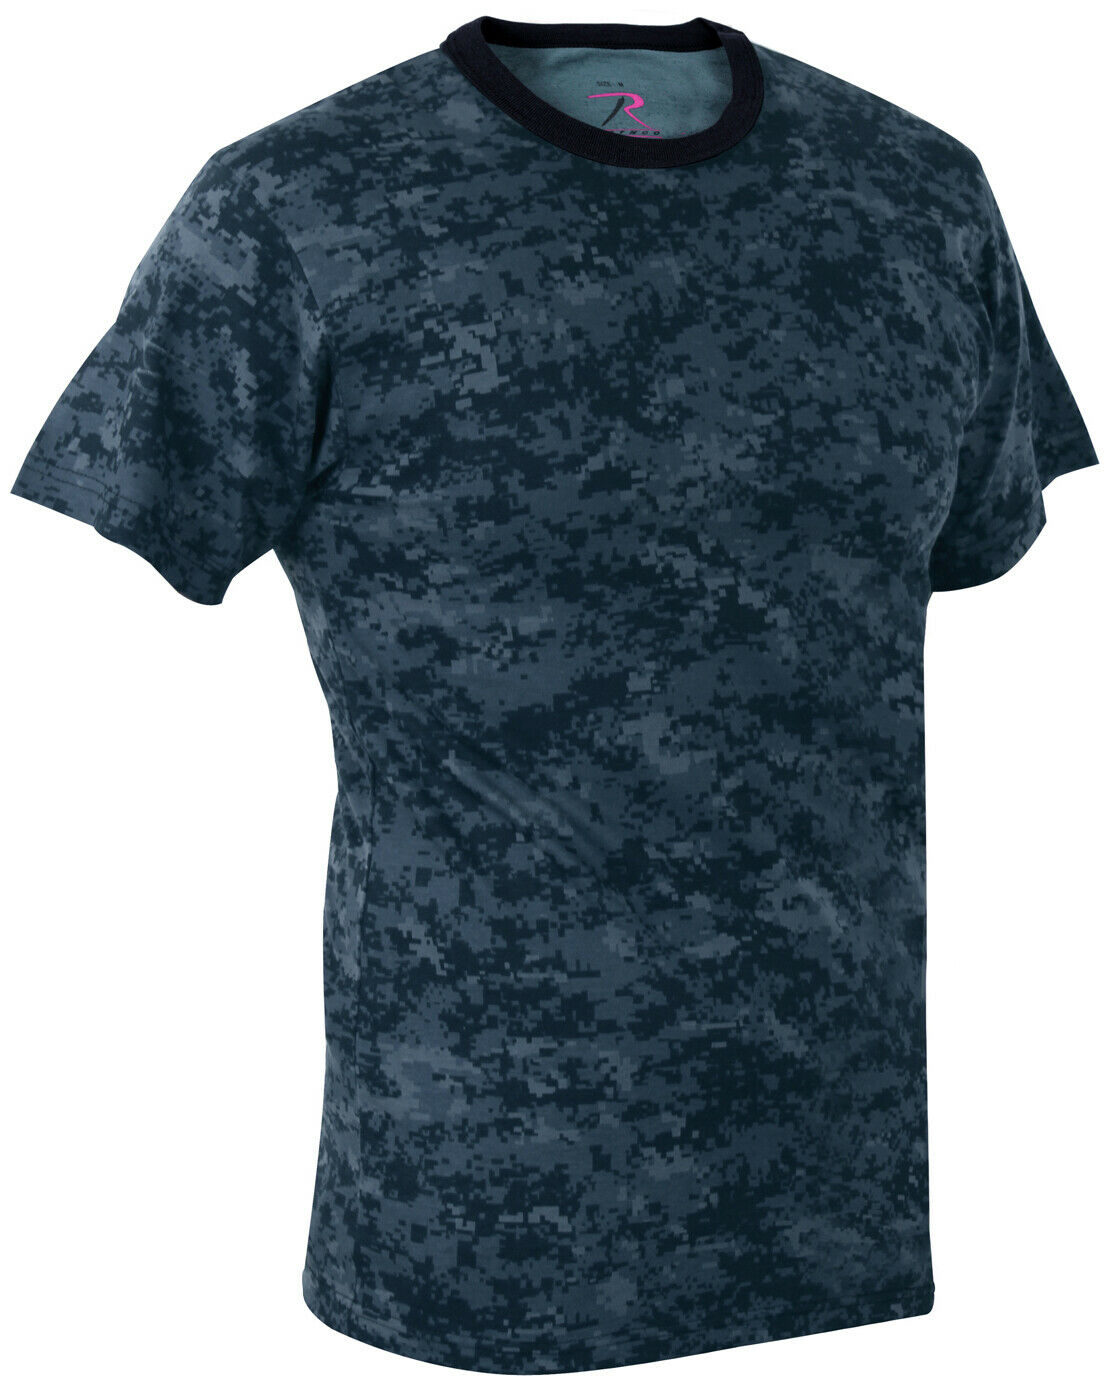 Rothco Digital Camo T-Shirt - Navy Blue